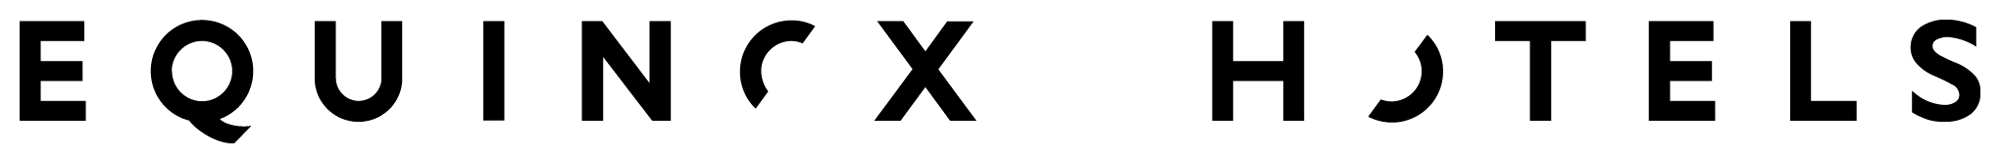 equinox_hotels_logo.png